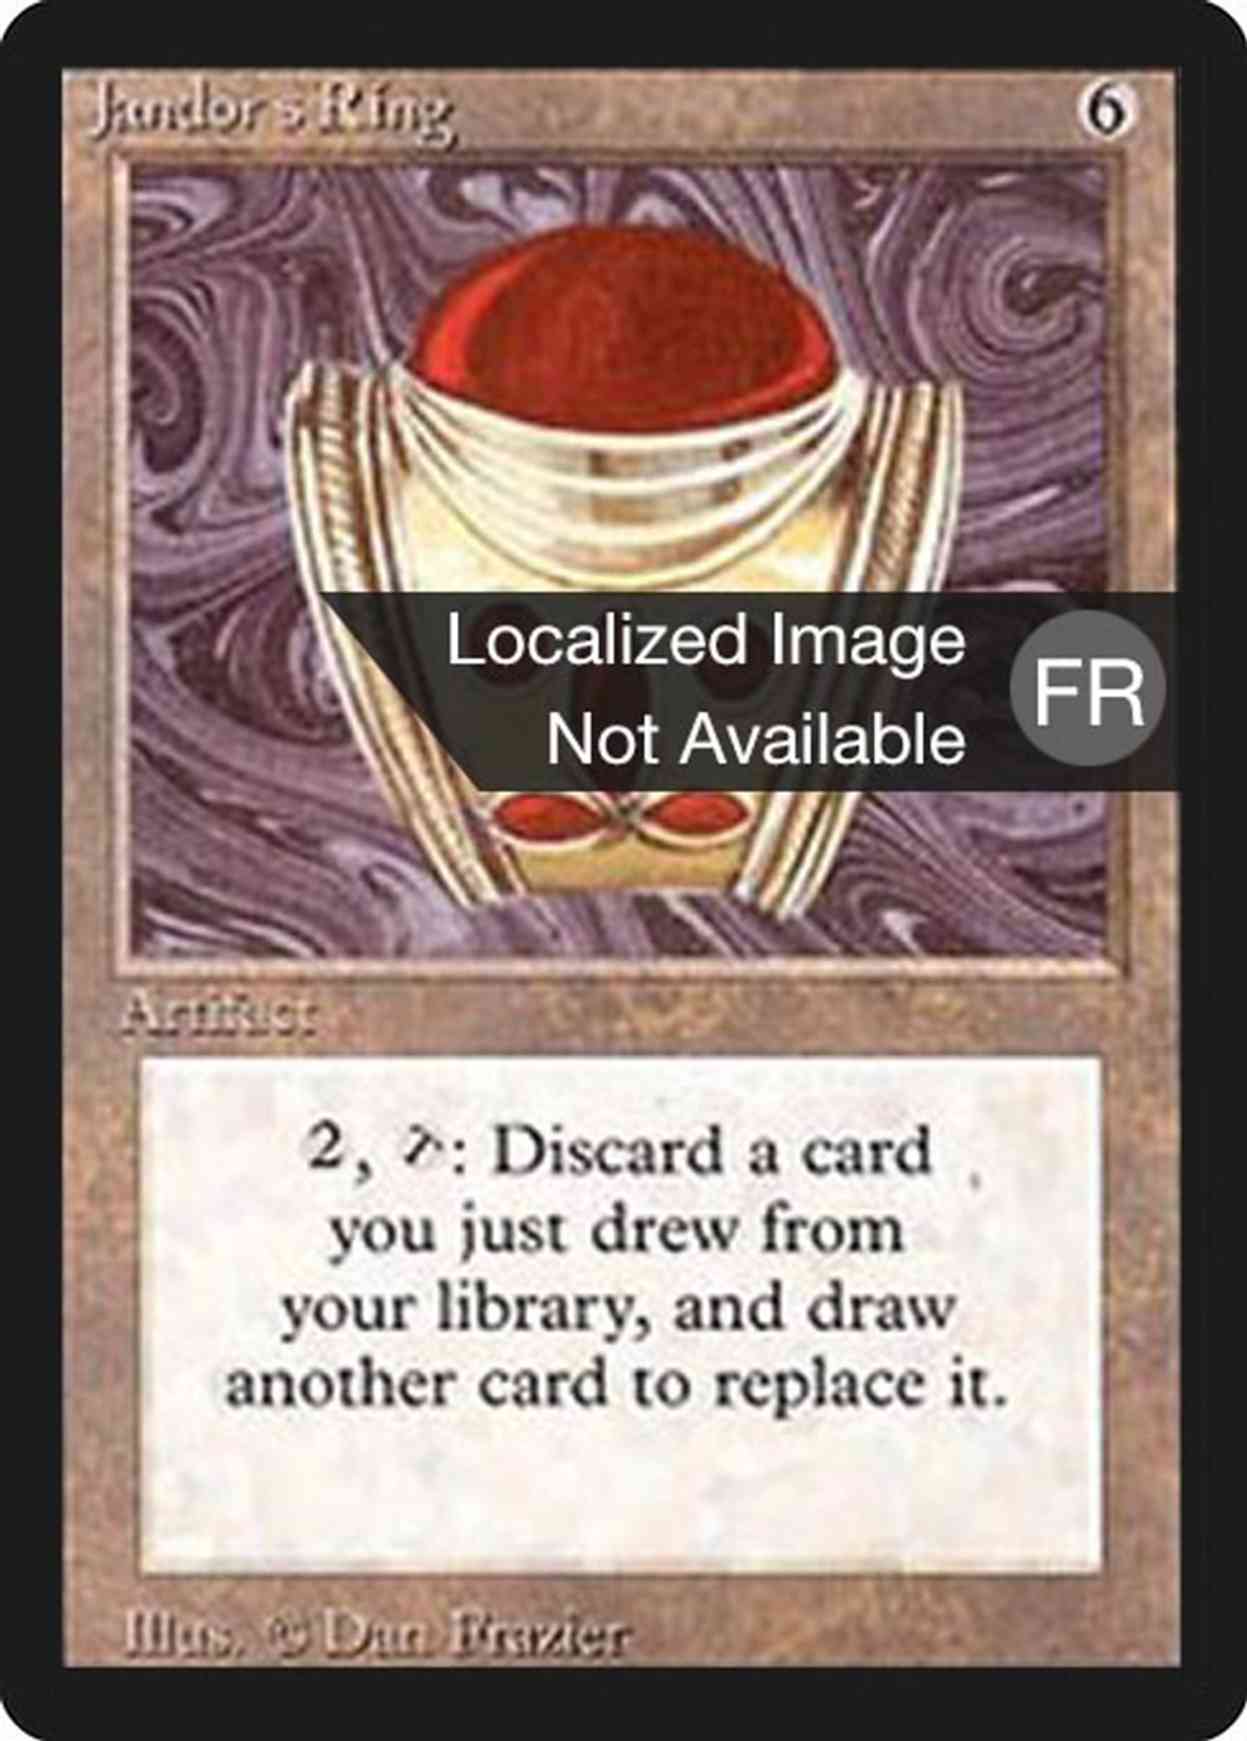 Jandor's Ring magic card front